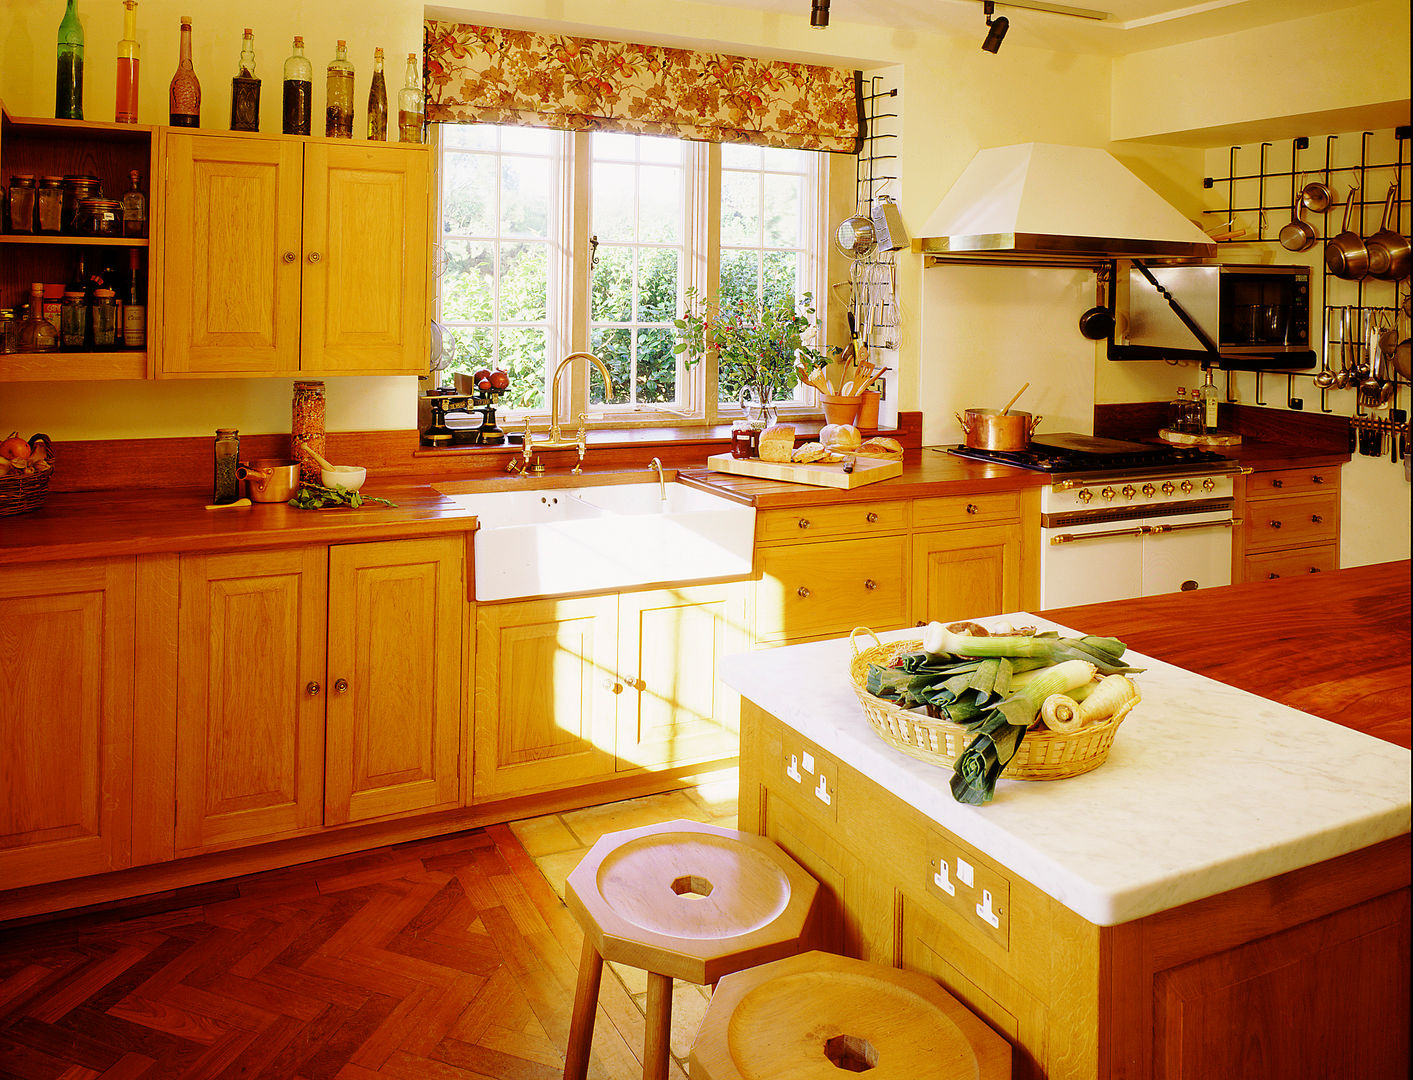 Barton Manor oak kitchen designed and made by Tim Wood Tim Wood Limited Кухня Дерево Дерев'яні